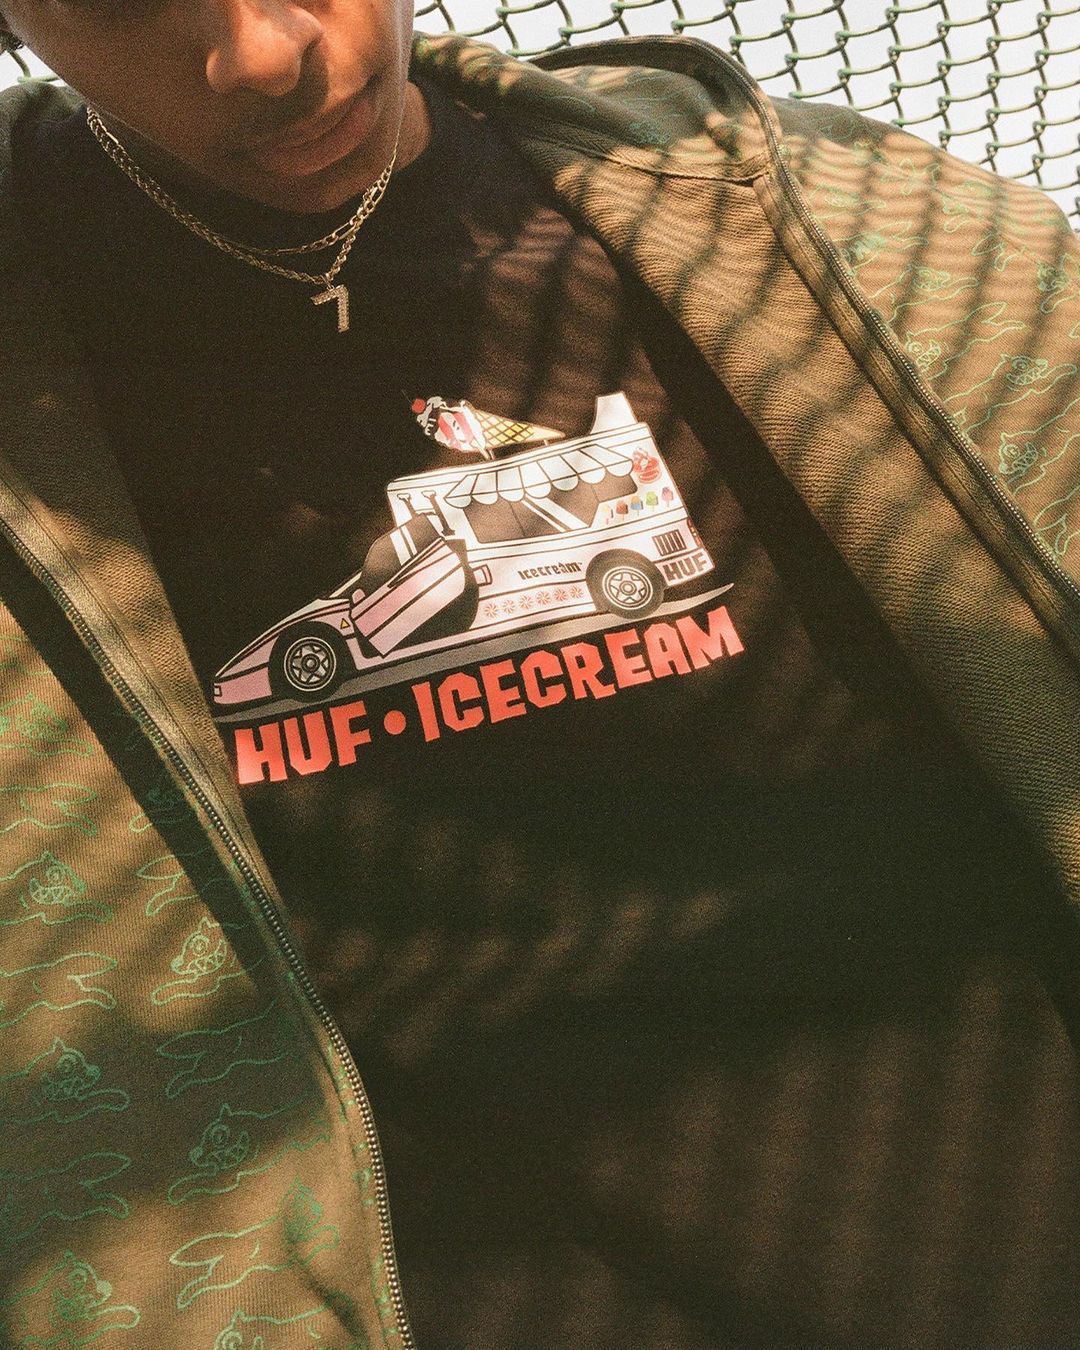 【HUF 20周年】ICECREAM × HUF コラボコレクションが海外 9/22 発売予定 (アイスクリーム ハフ)